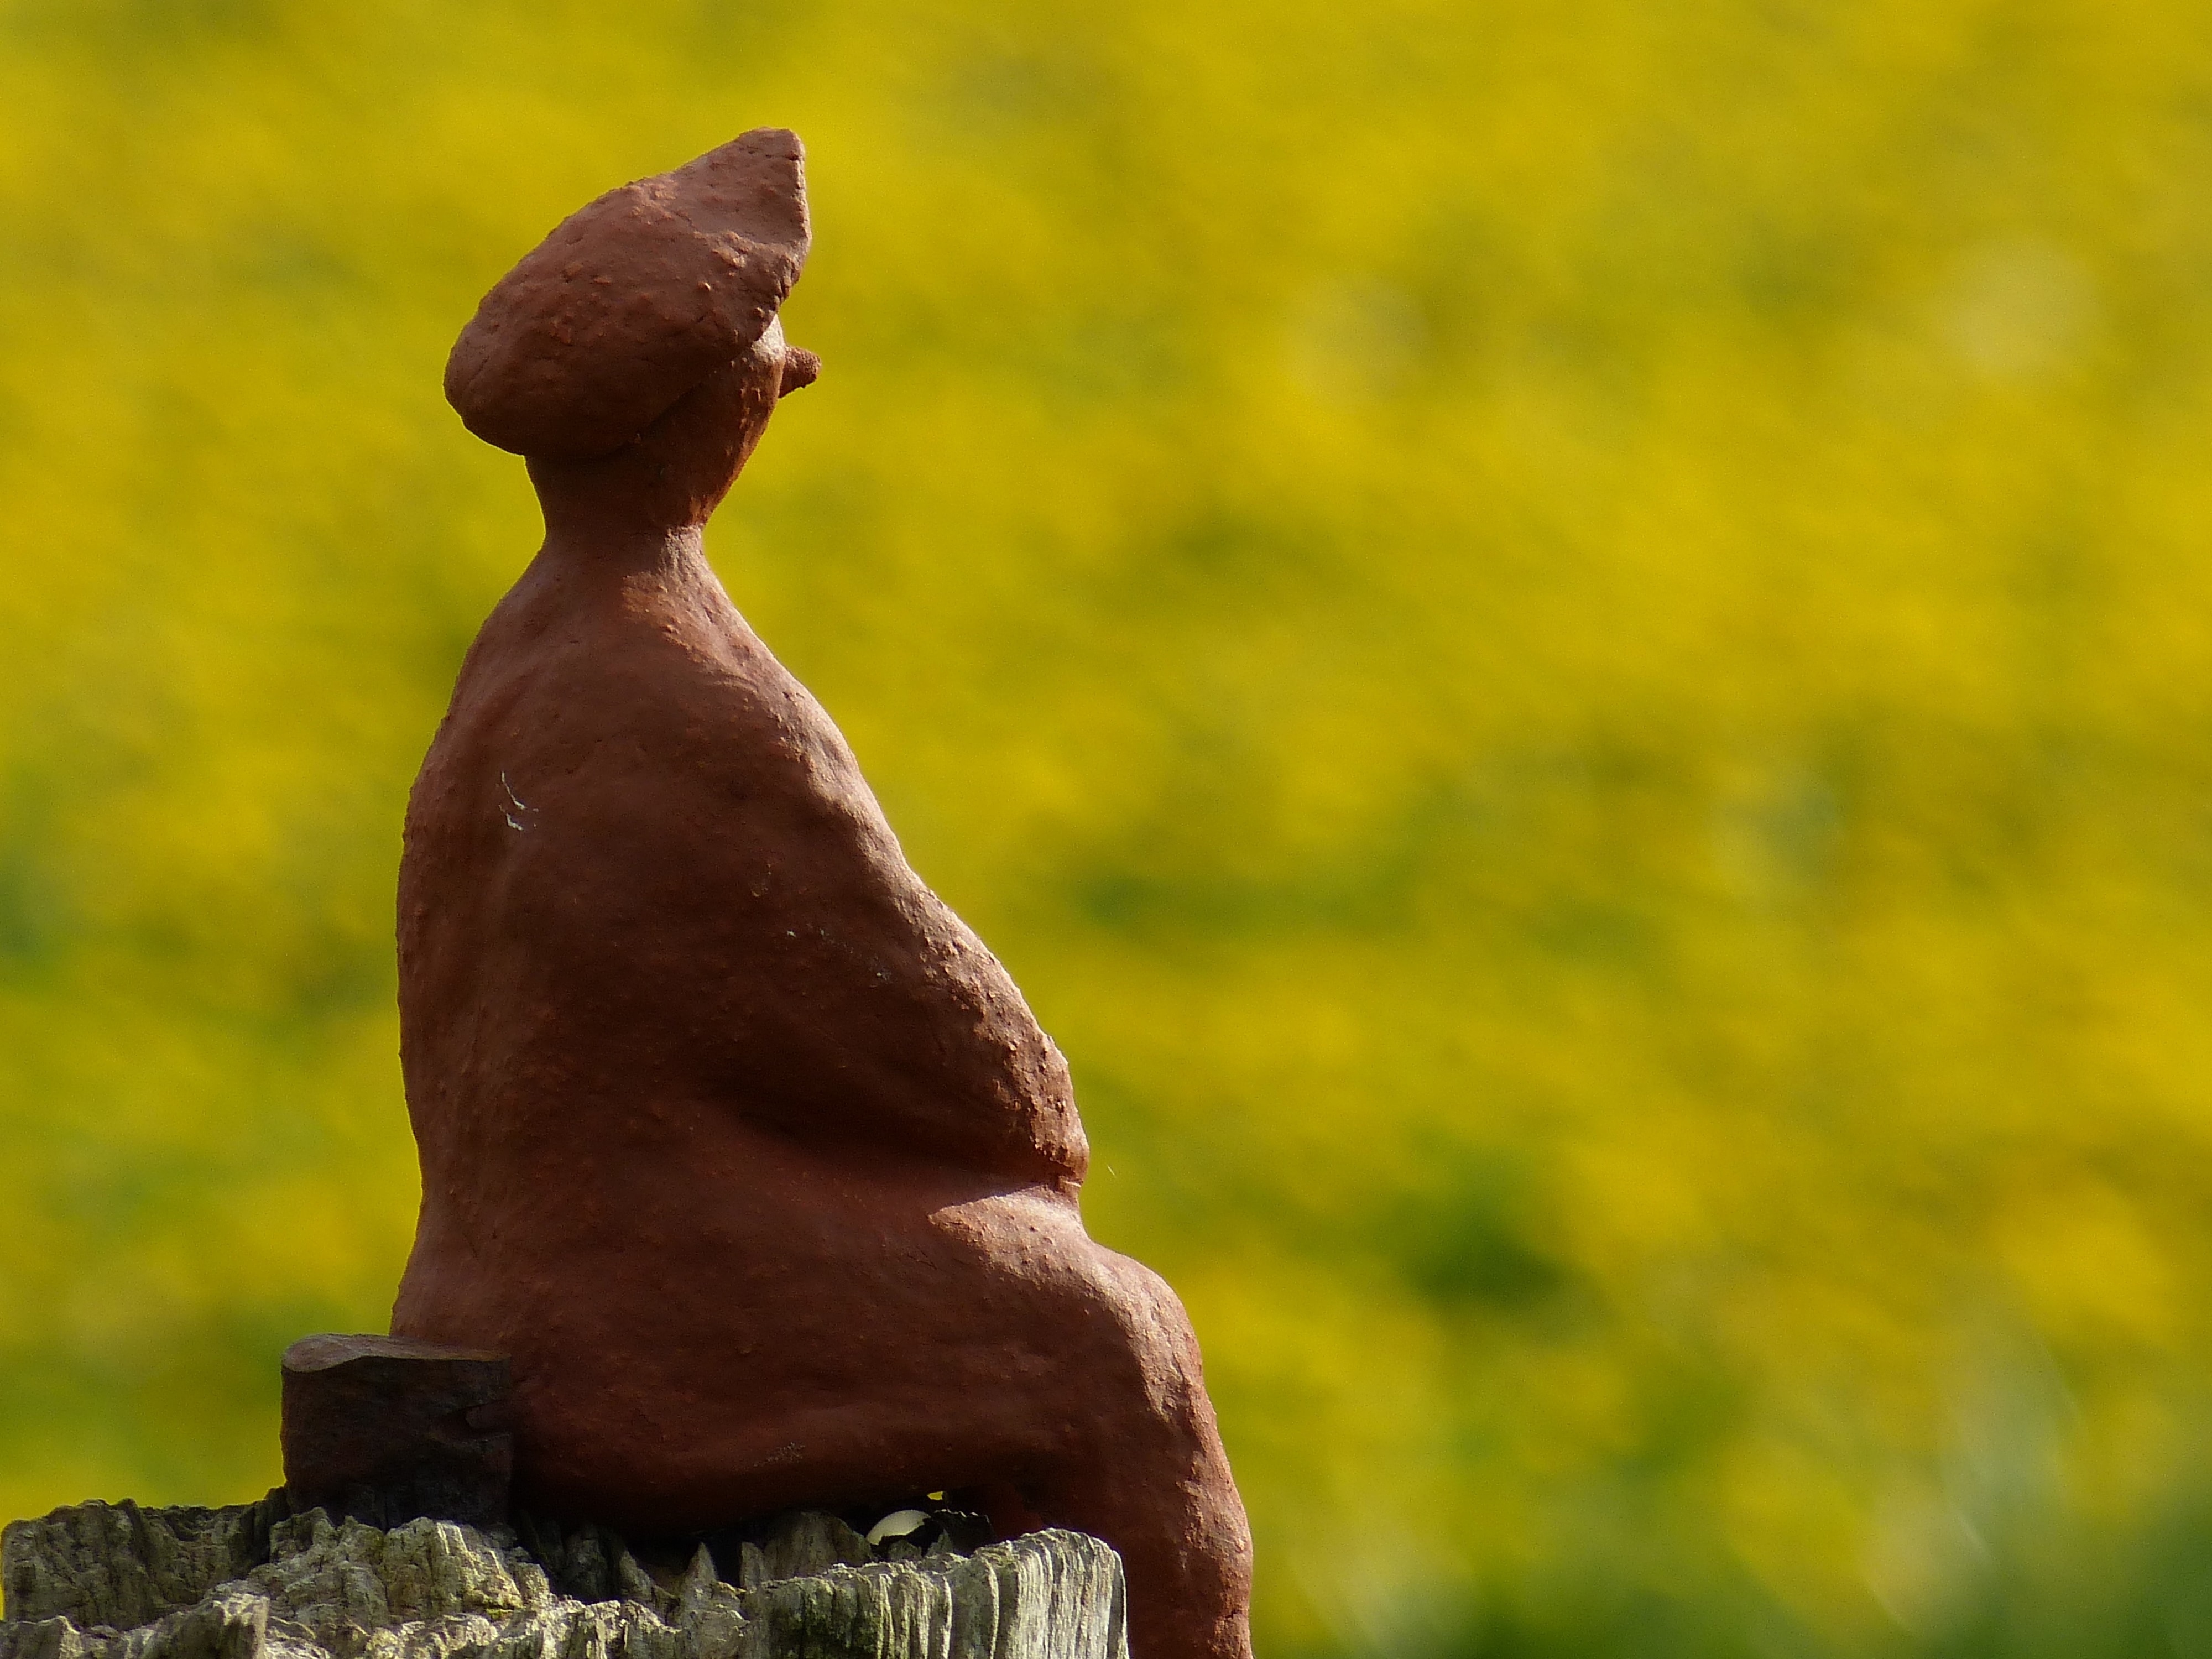 ceramic figurine of man sitting